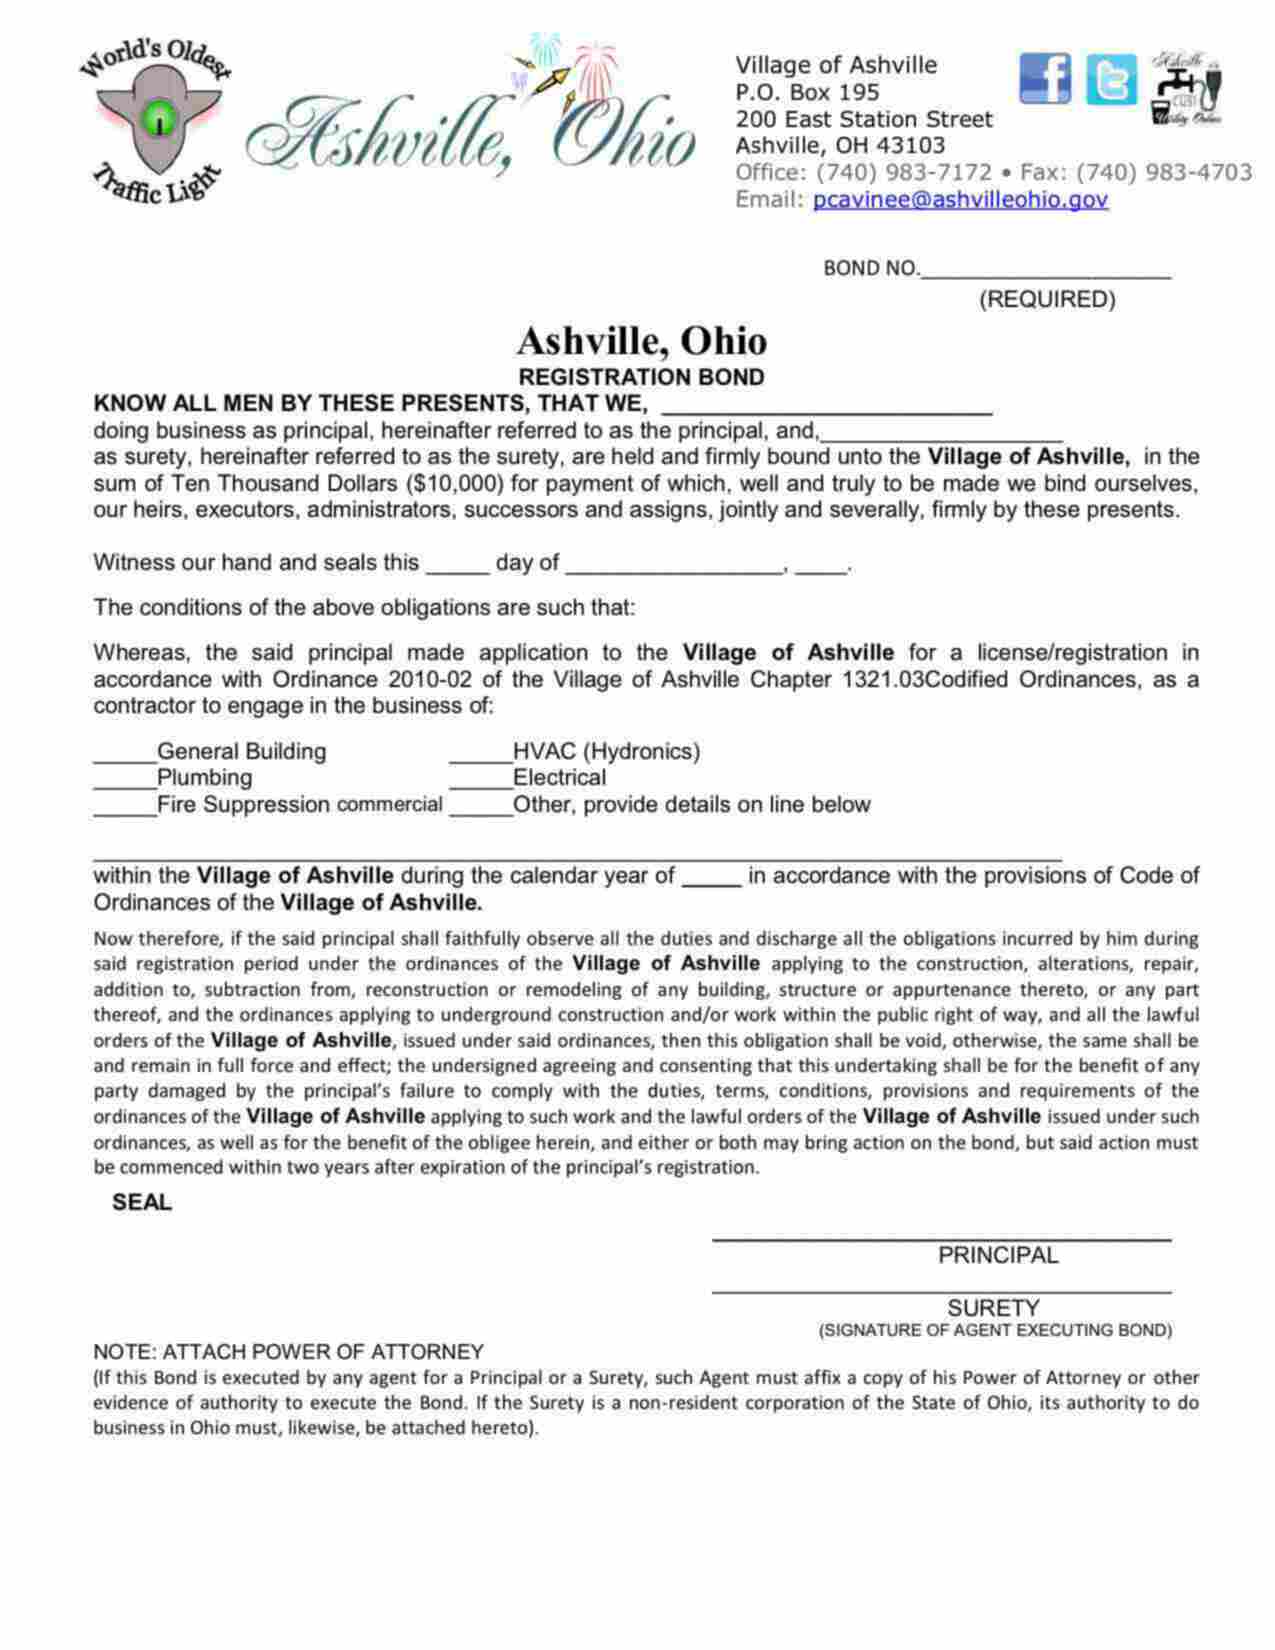 Ohio Registration - HVAC (Hydronics) Bond Form